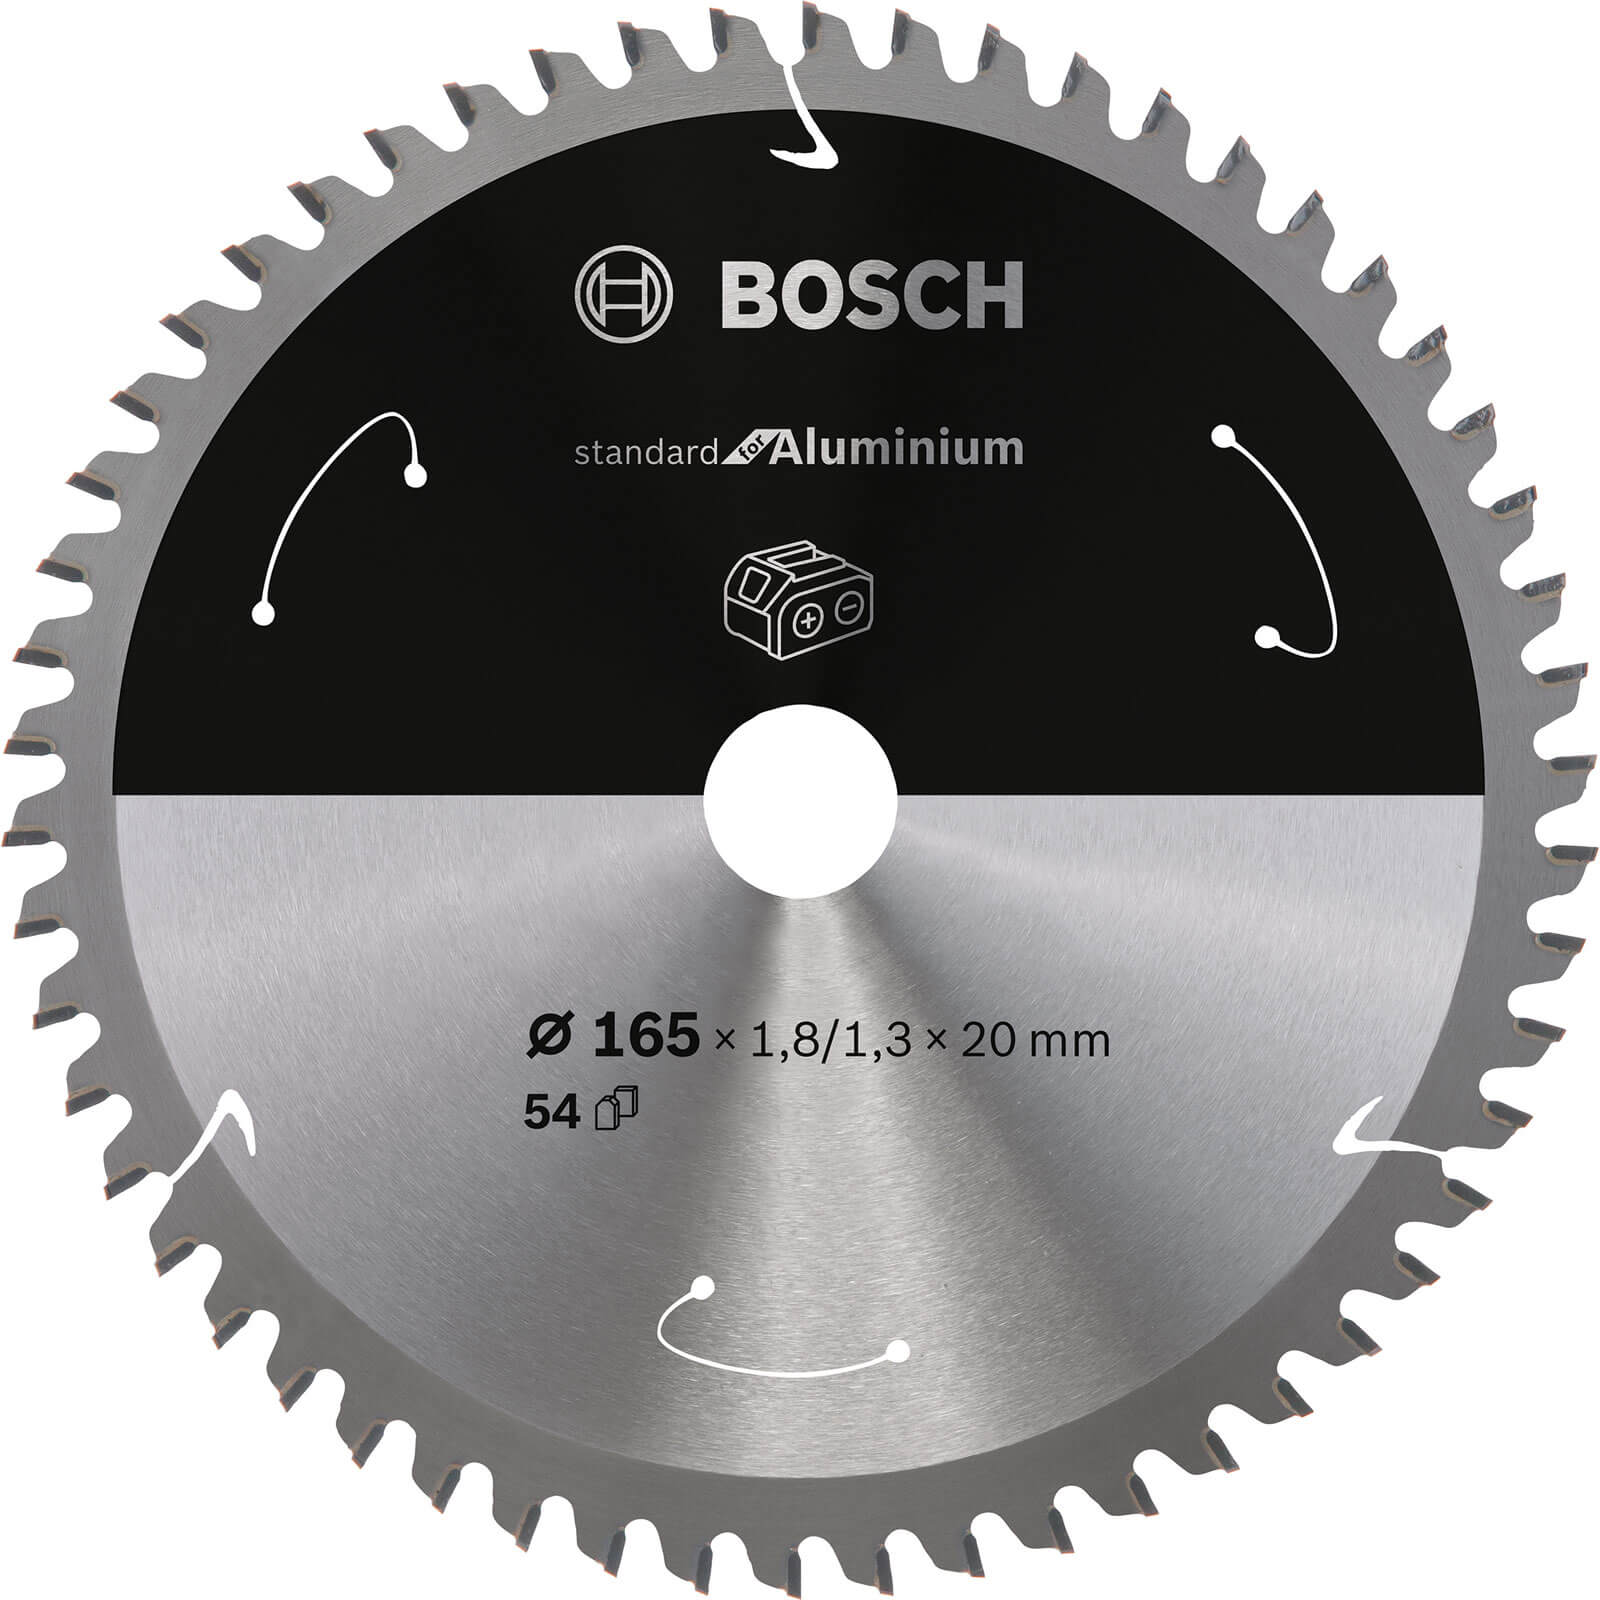 Image of Bosch Cordless Circular Saw Blade for Aluminium 165mm 54T 20mm